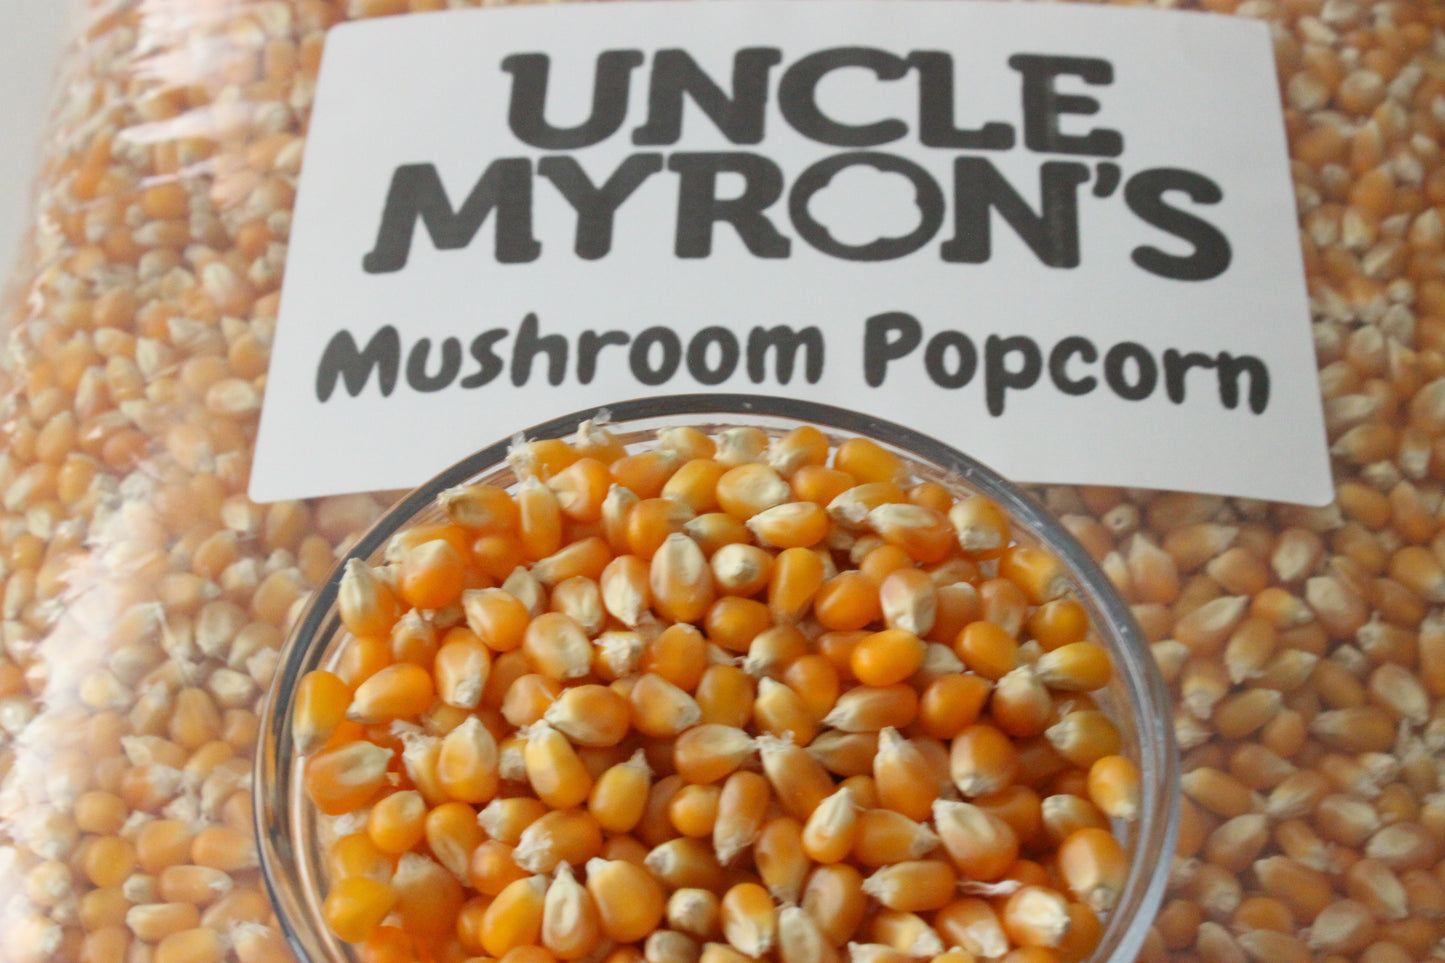 10 Pound Mushroom Popcorn Kernels